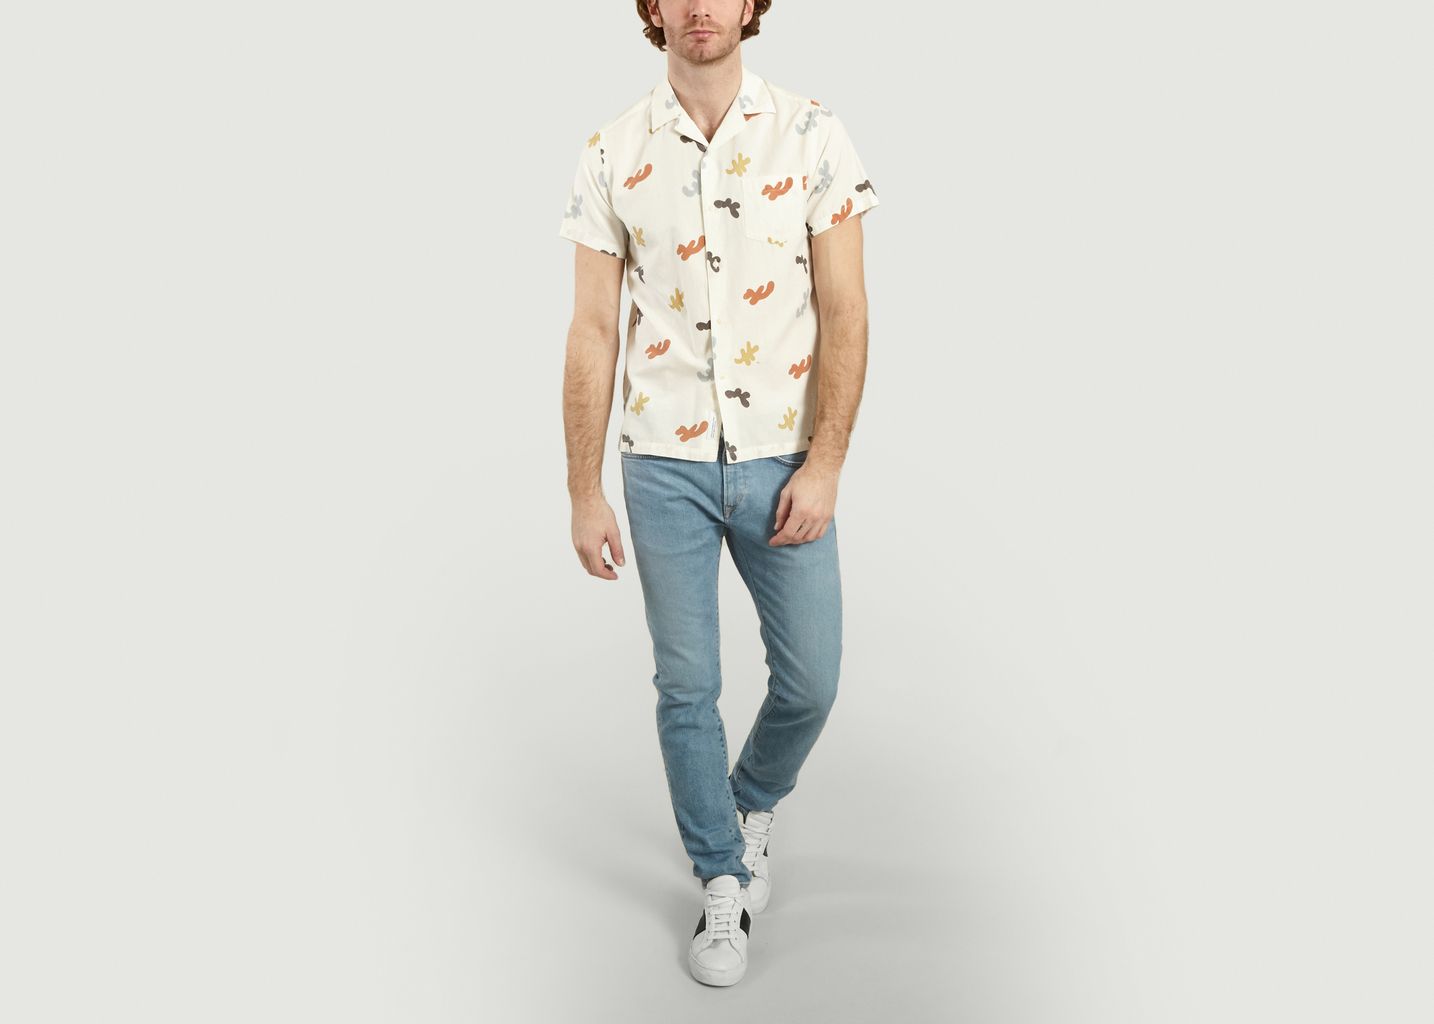 California short sleeves printed shirt - Edmmond Studios